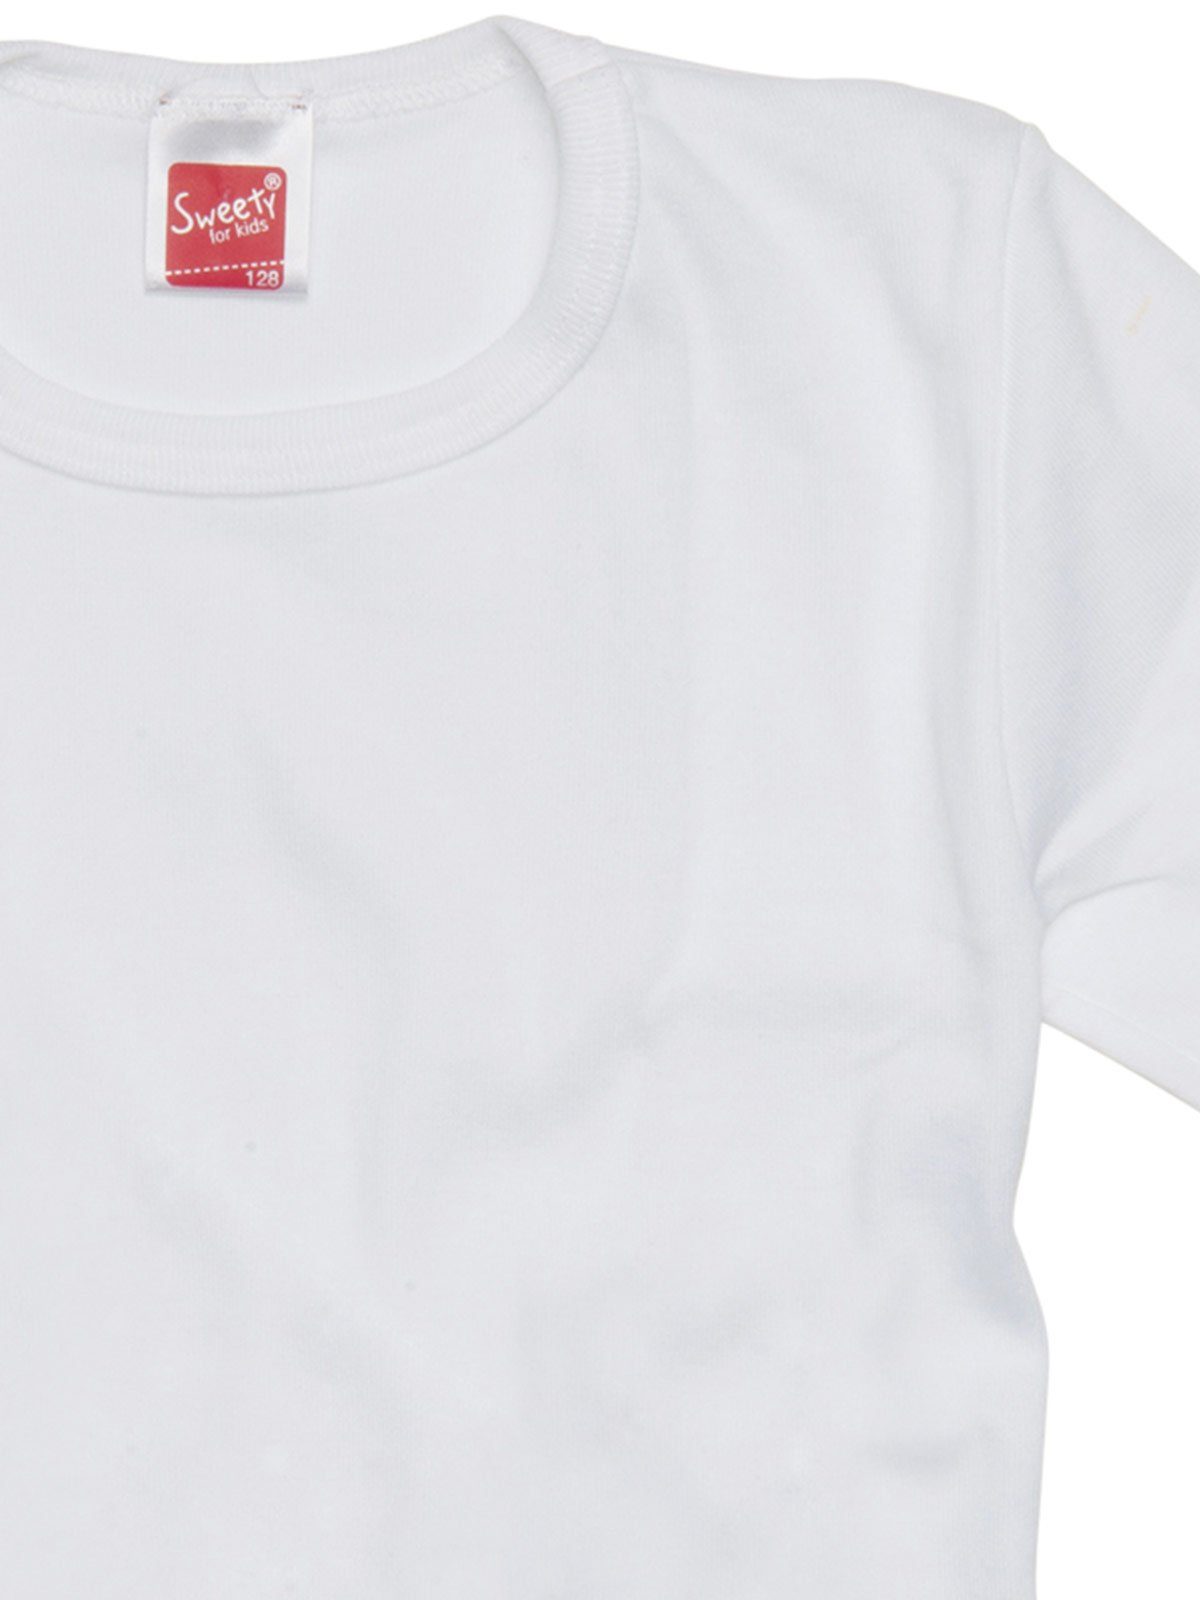 Kids (Stück, Shirt for 1-St) Markenqualität hohe Achselhemd weiss Sweety Kinder Winterwäsche